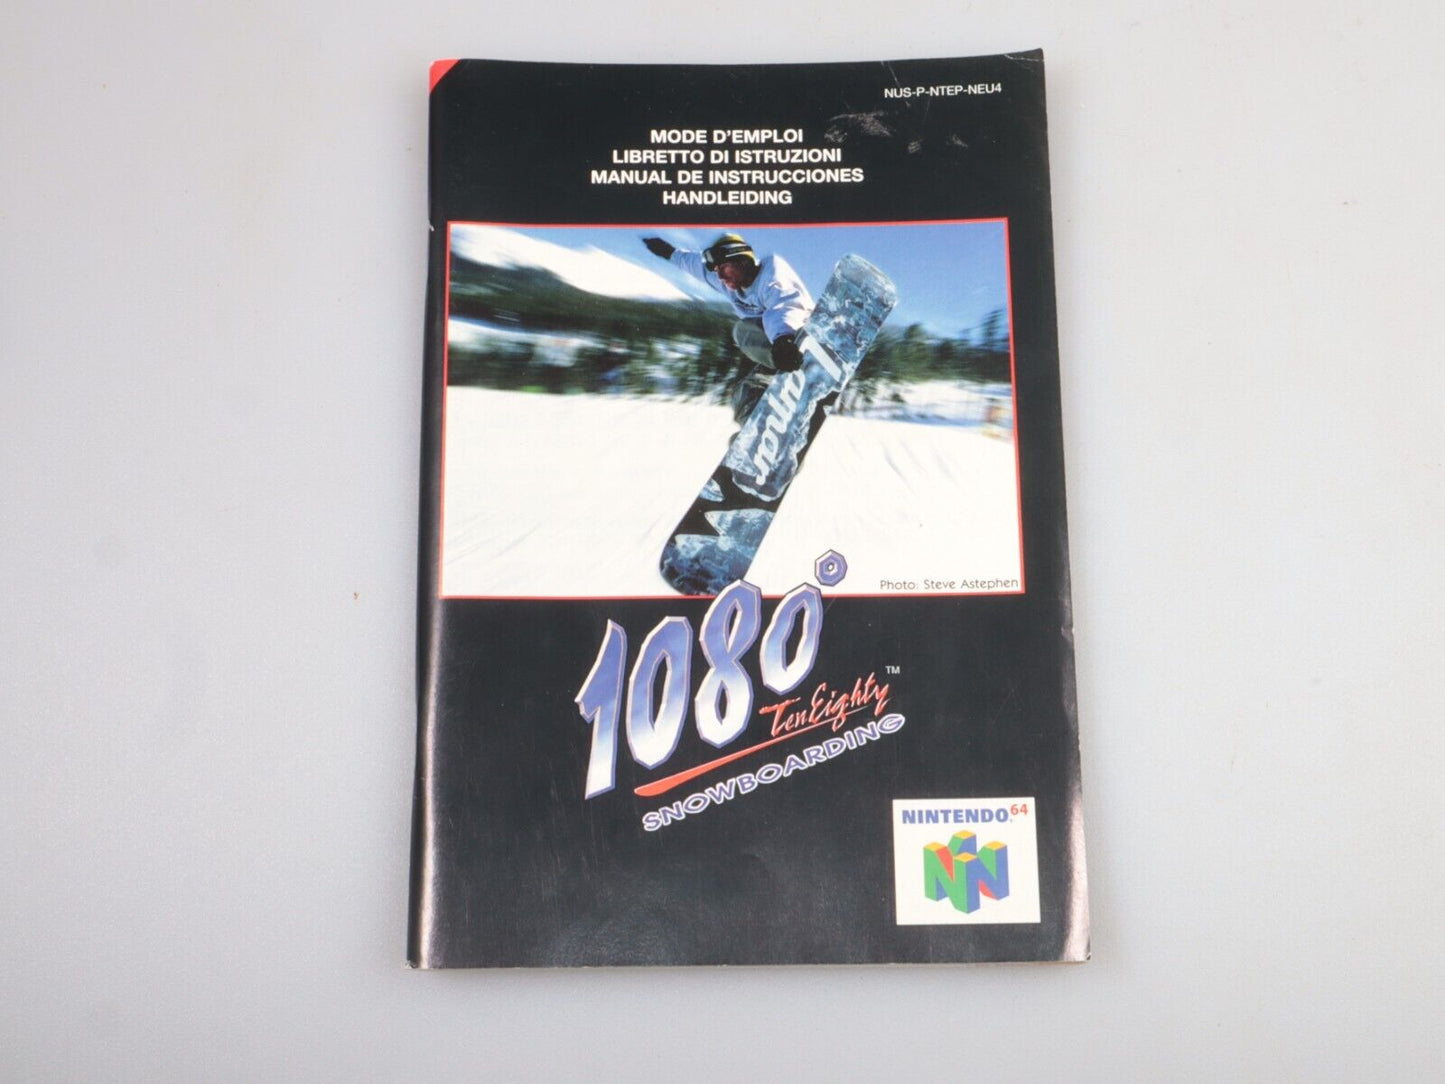 N64 | 1080 TenEighty Snowboarding (Cartridge Only)